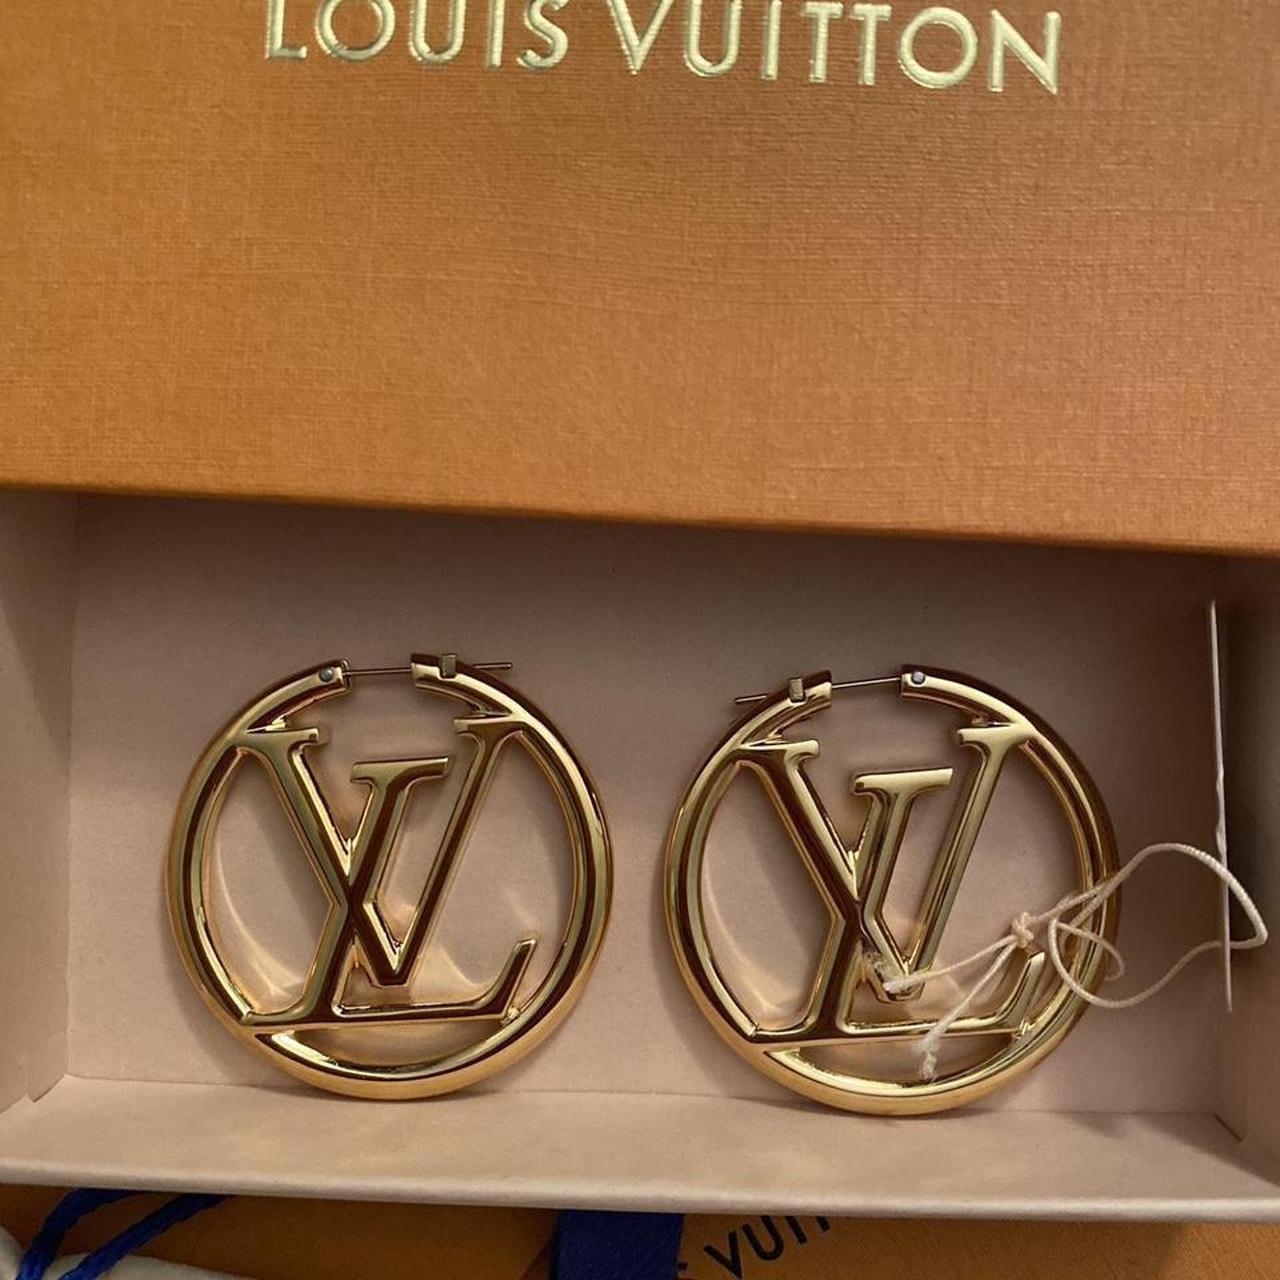 Designer durag, LV Durag, Supreme x Louis Vuitton - Depop